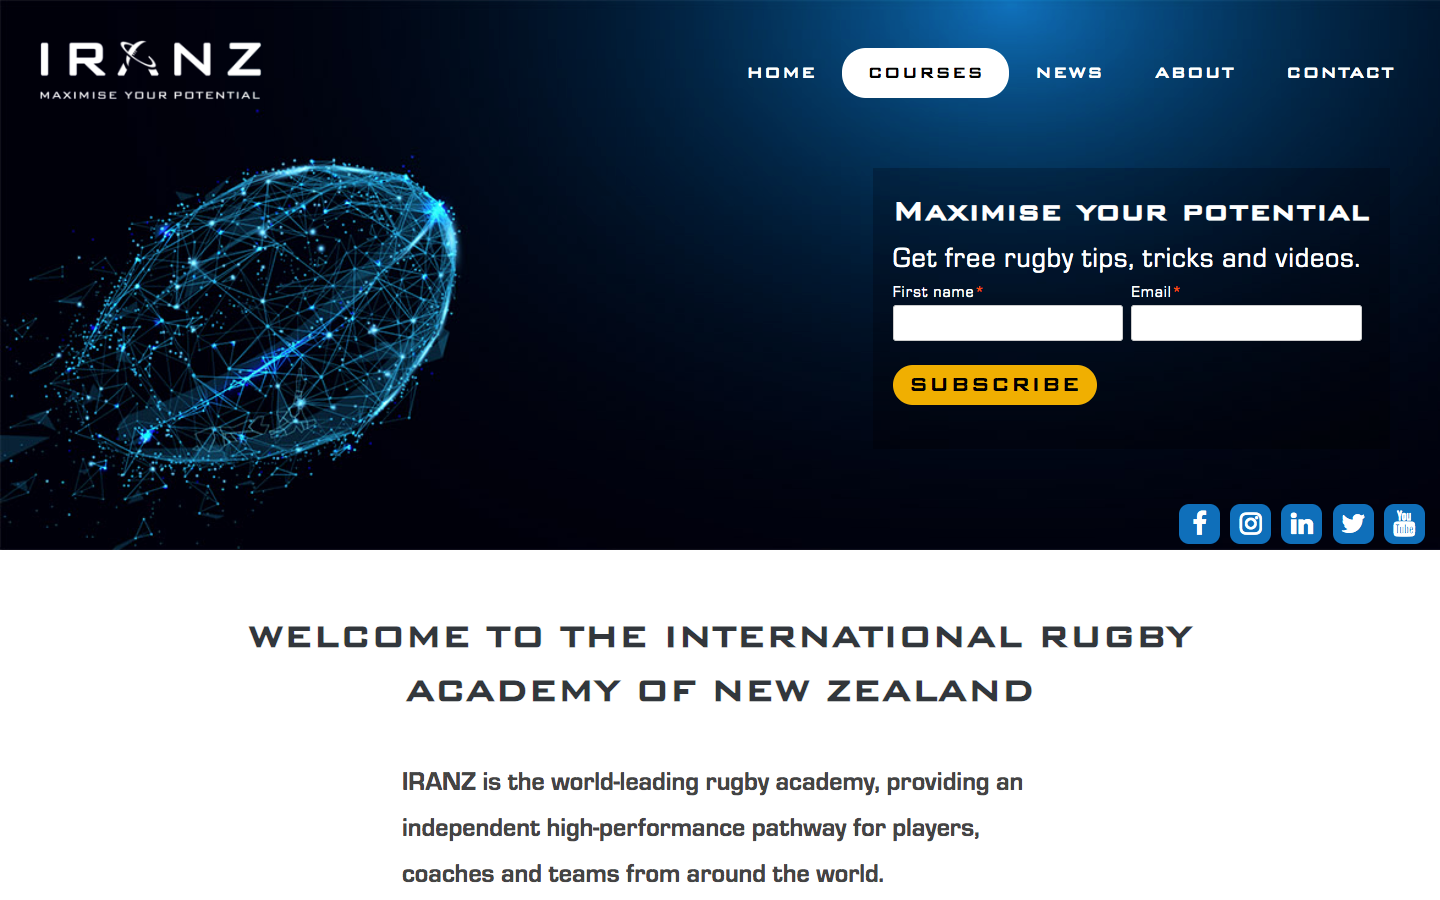 IRANZ International Rugby Academy of New Zealand